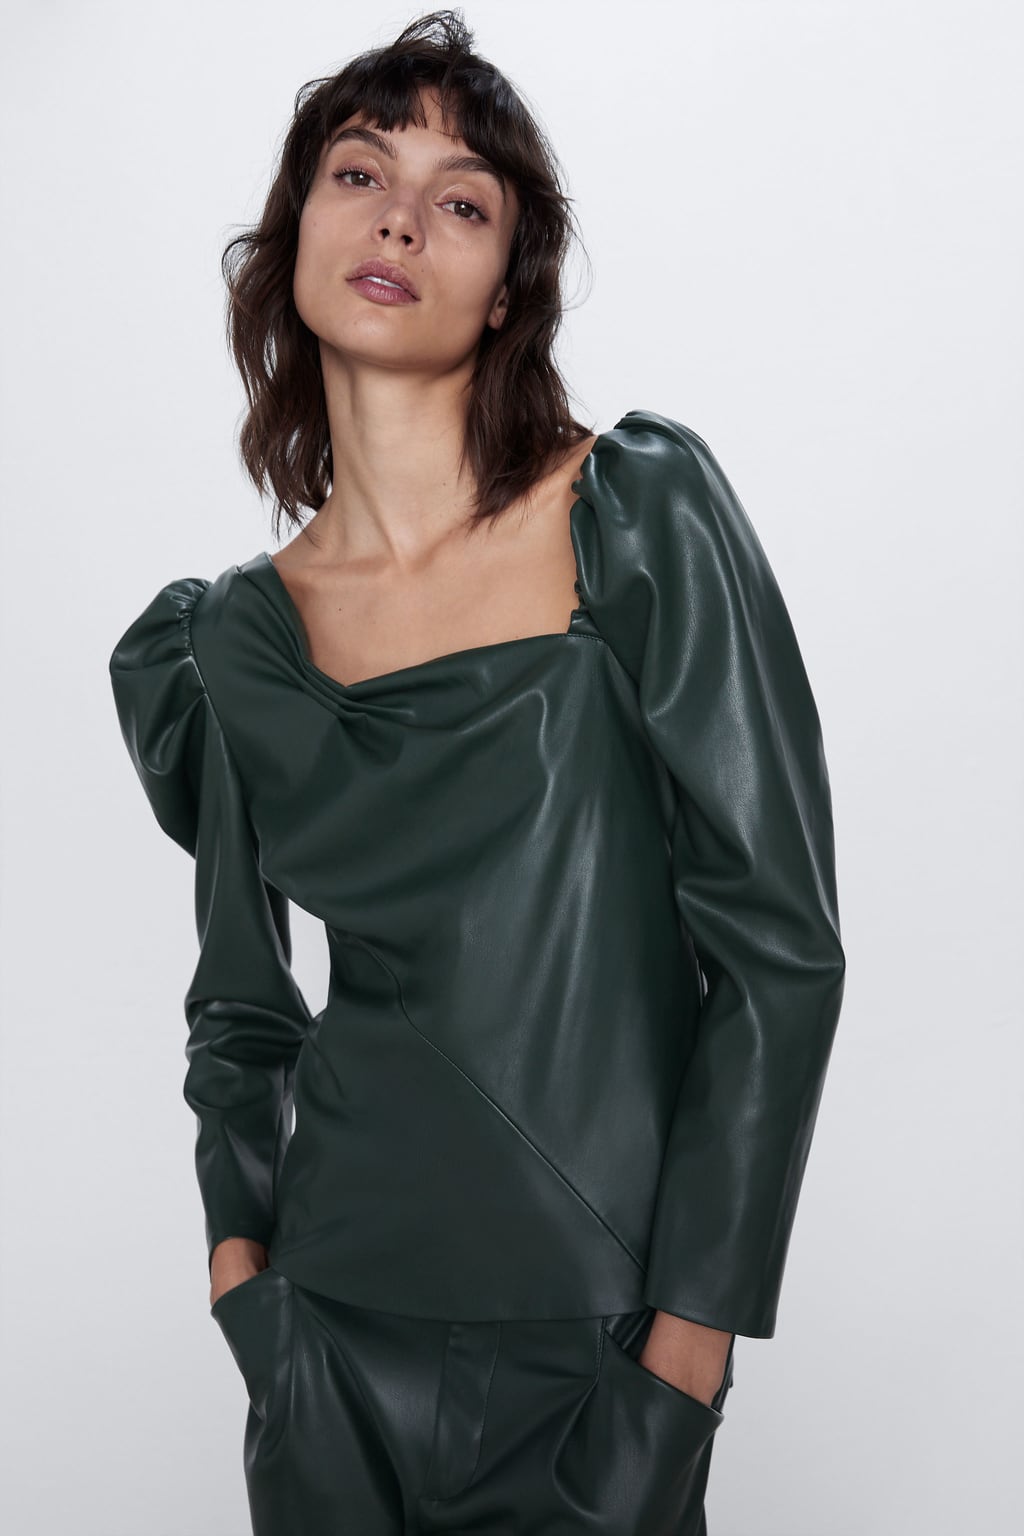 zenska moda 2020 kožne haljine 20 zanimljivih oversized košulja Asos H&M Zara Stradivarius Mango